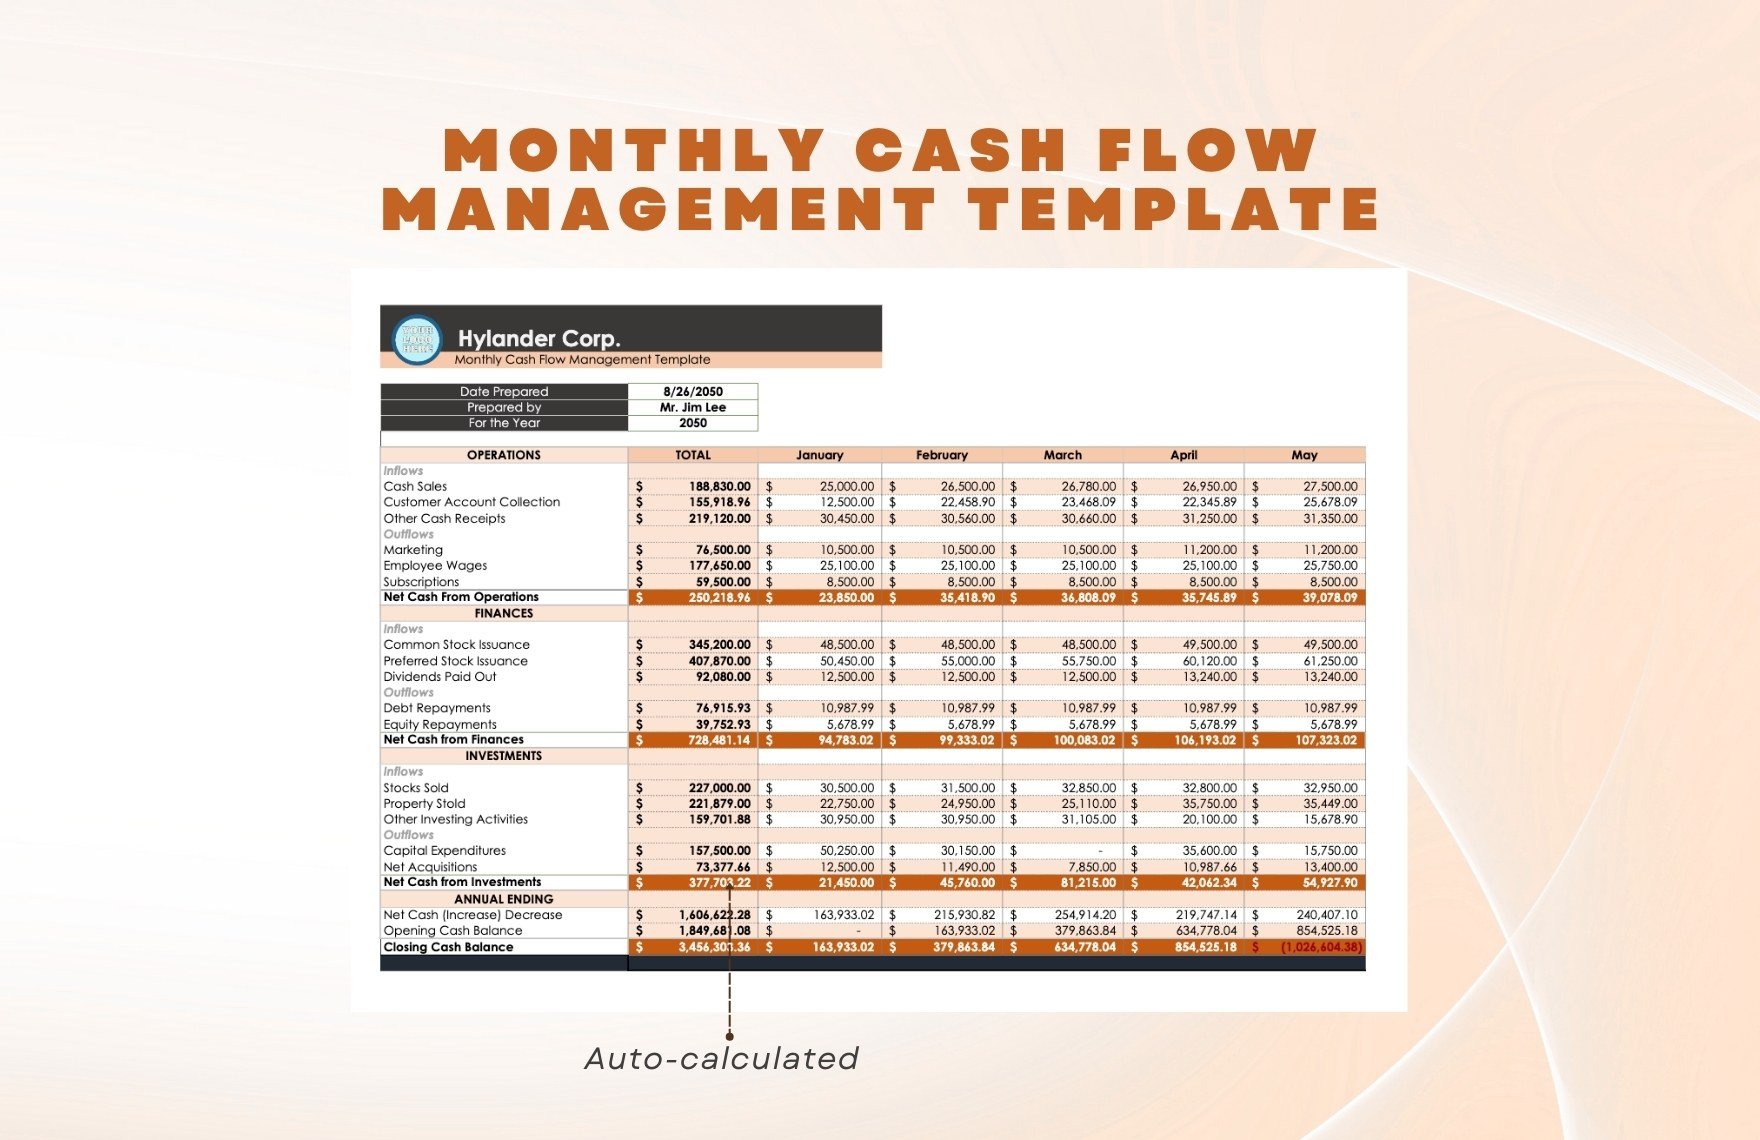 Monthly Cash Flow Management Template